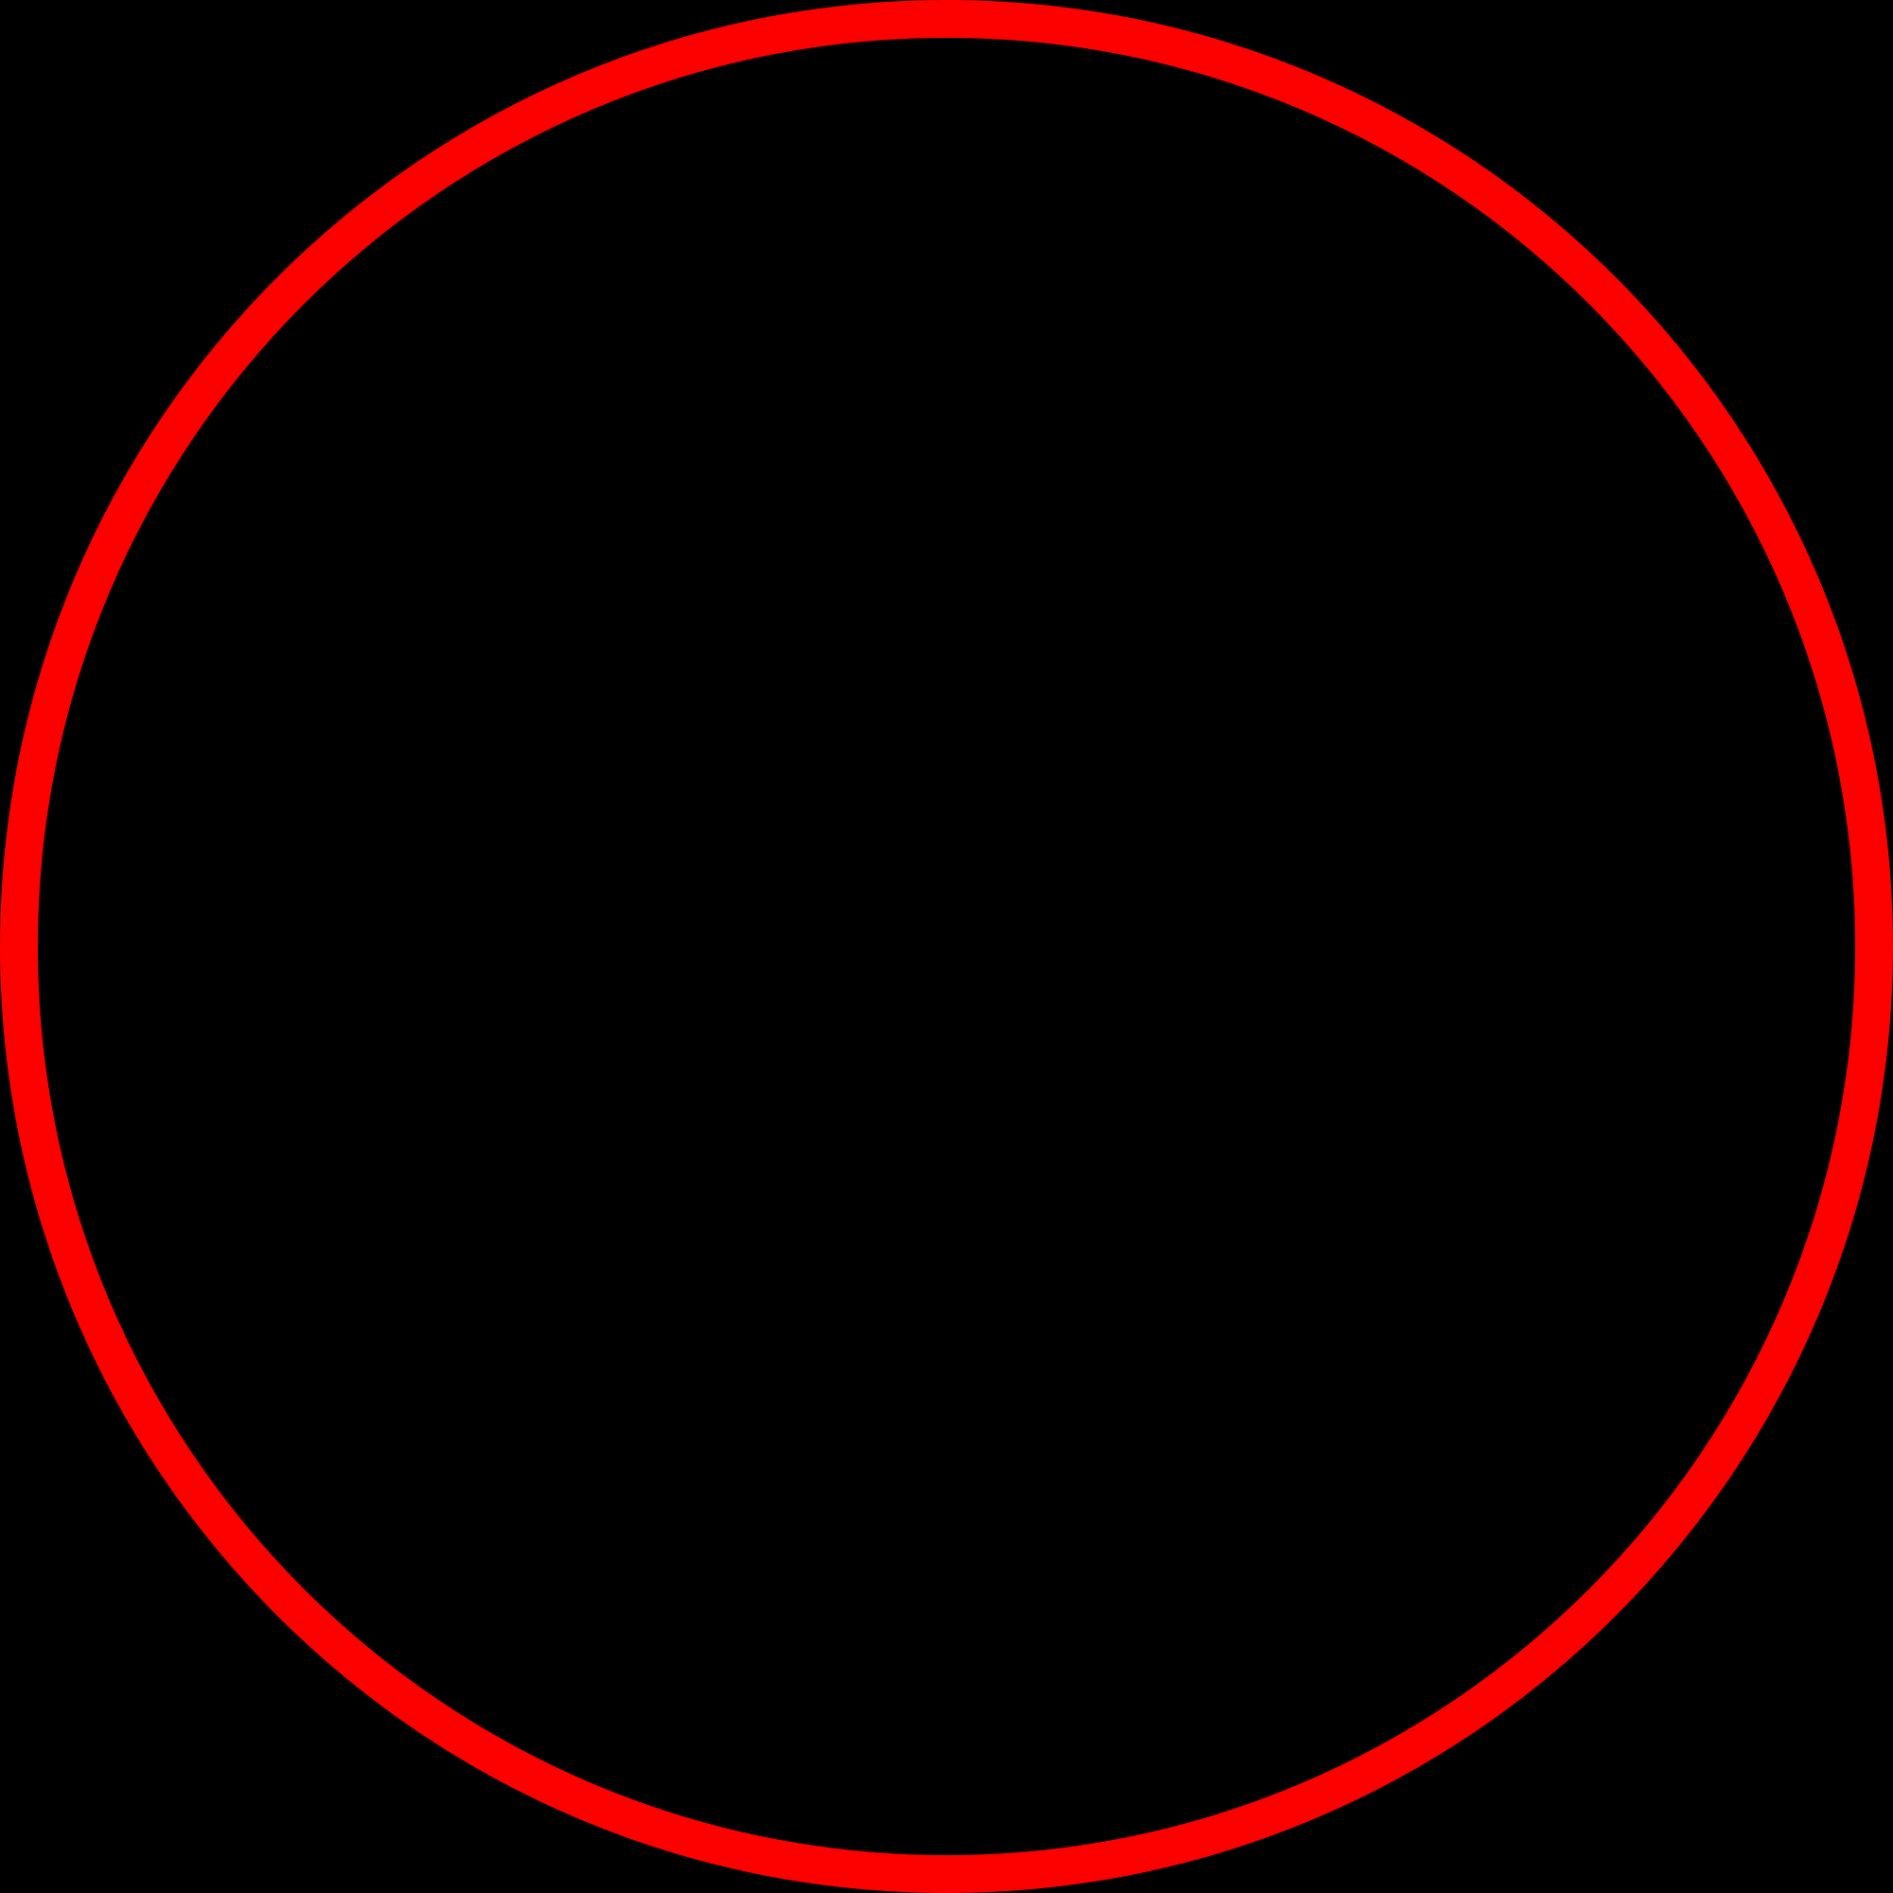 Конец большого круга. Черный круг. Красный круг. Красный круг на черном фоне. Кружок на черном фоне.